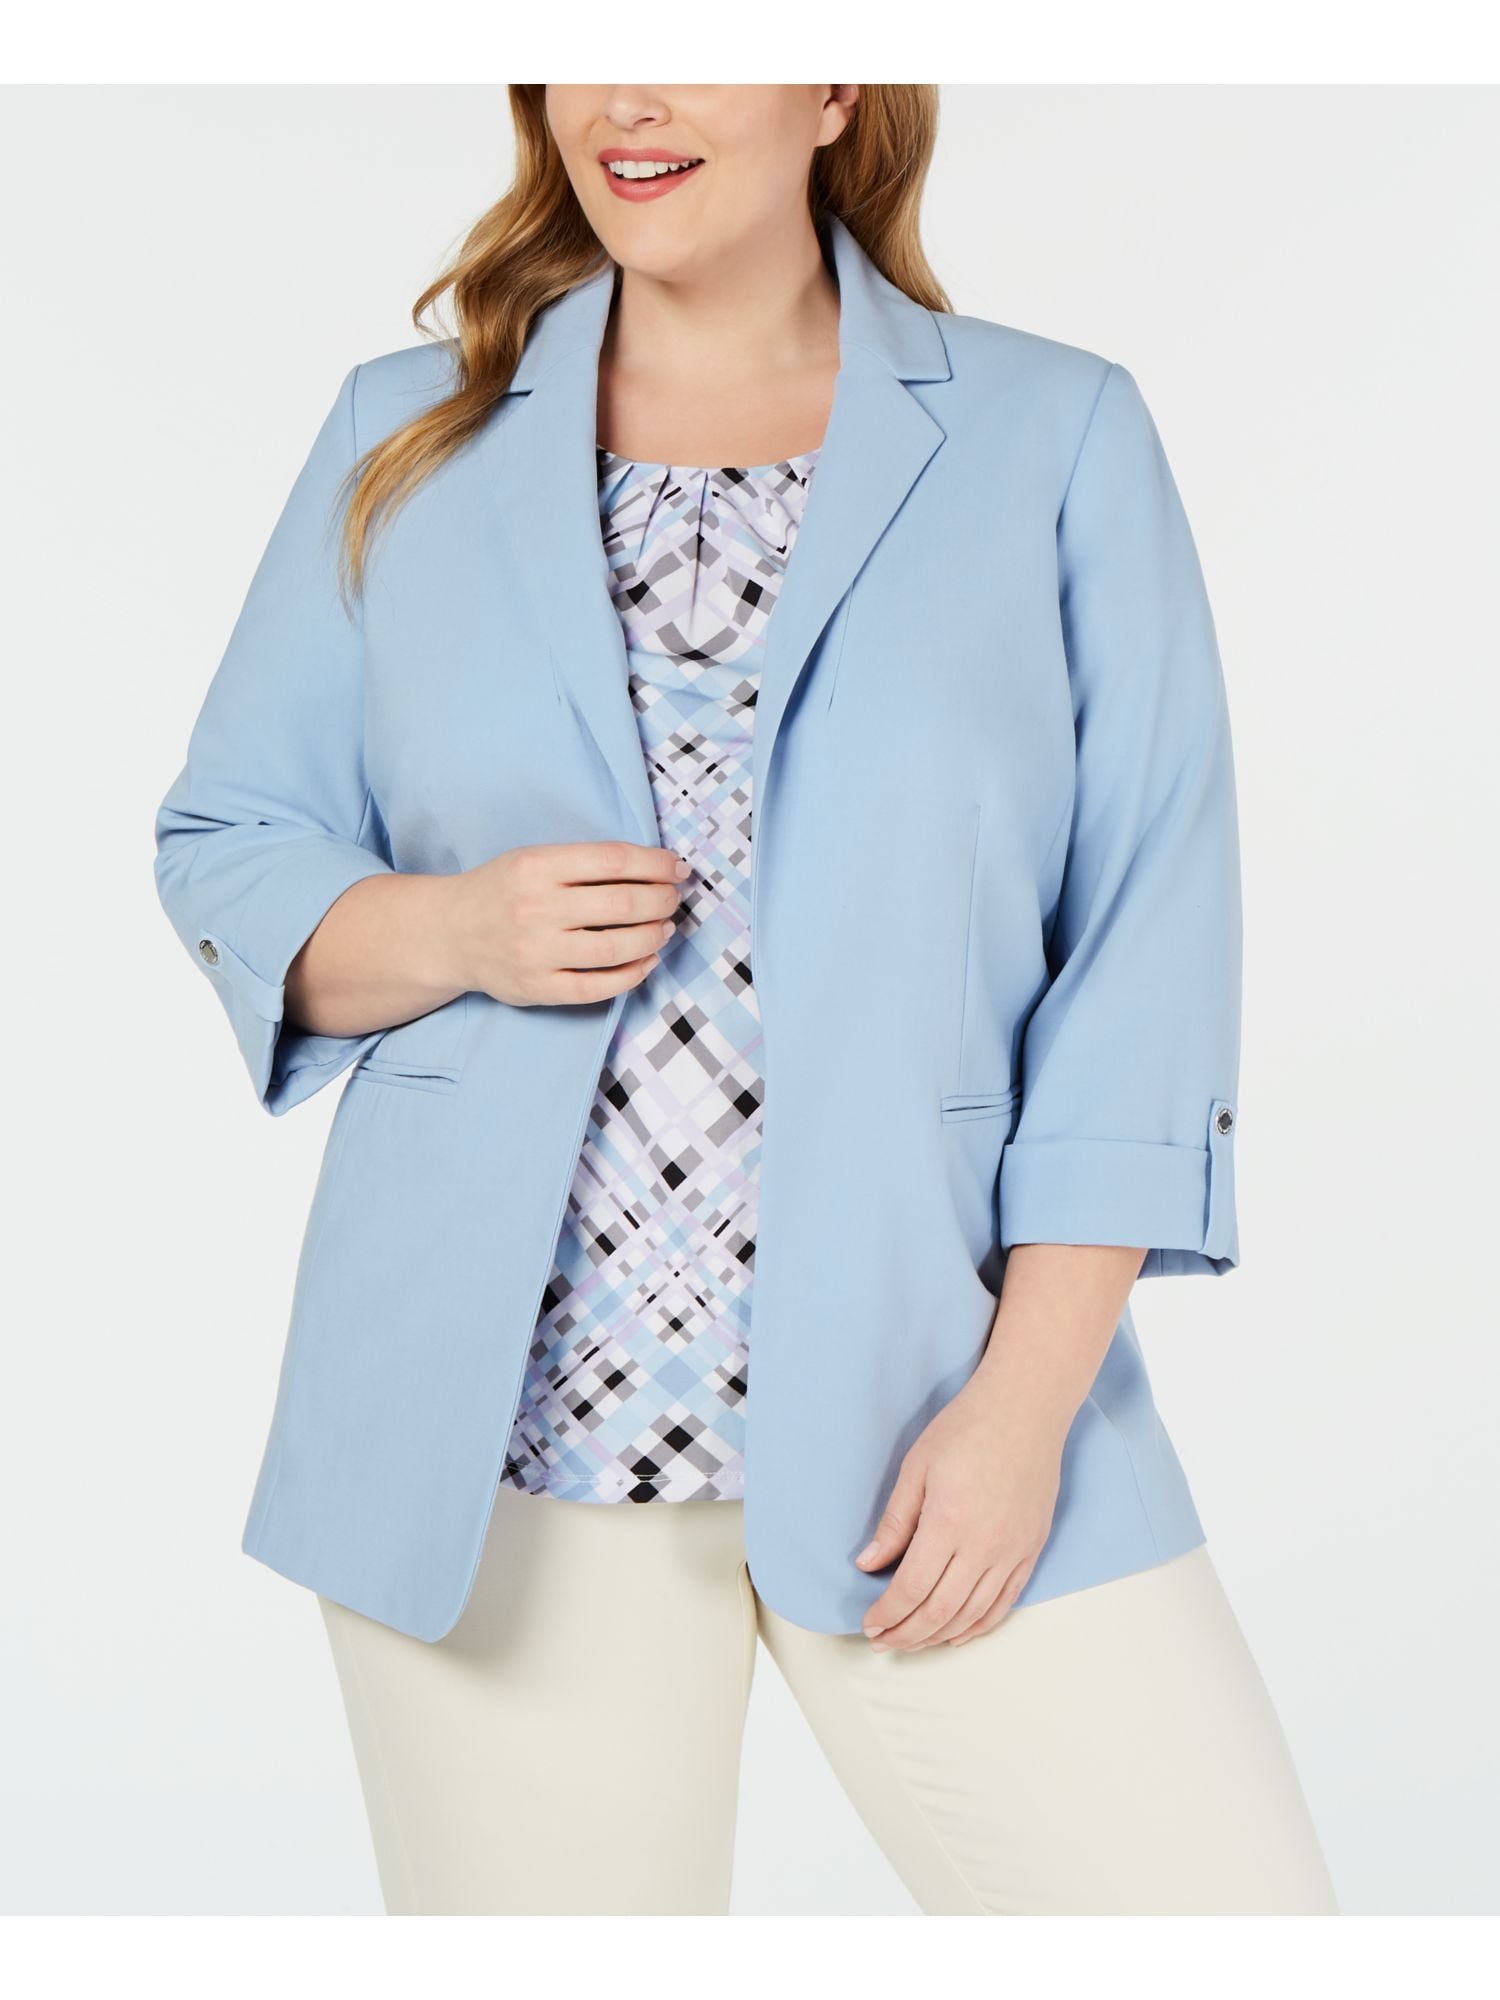 light blue blazer outfit womens